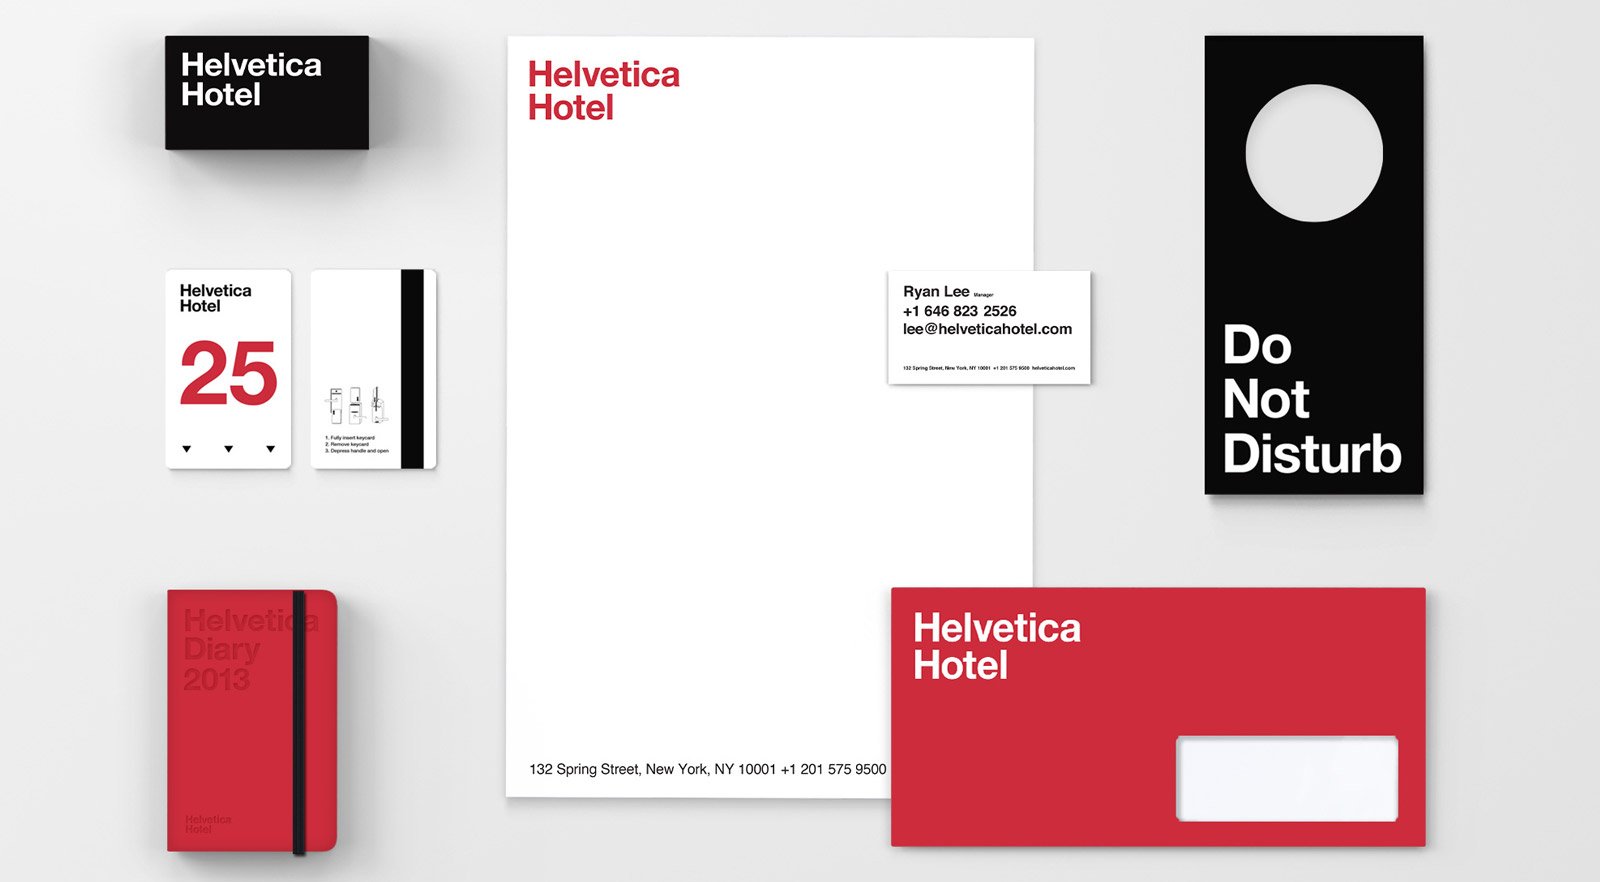 Helvetica Hotel - Boteco Design